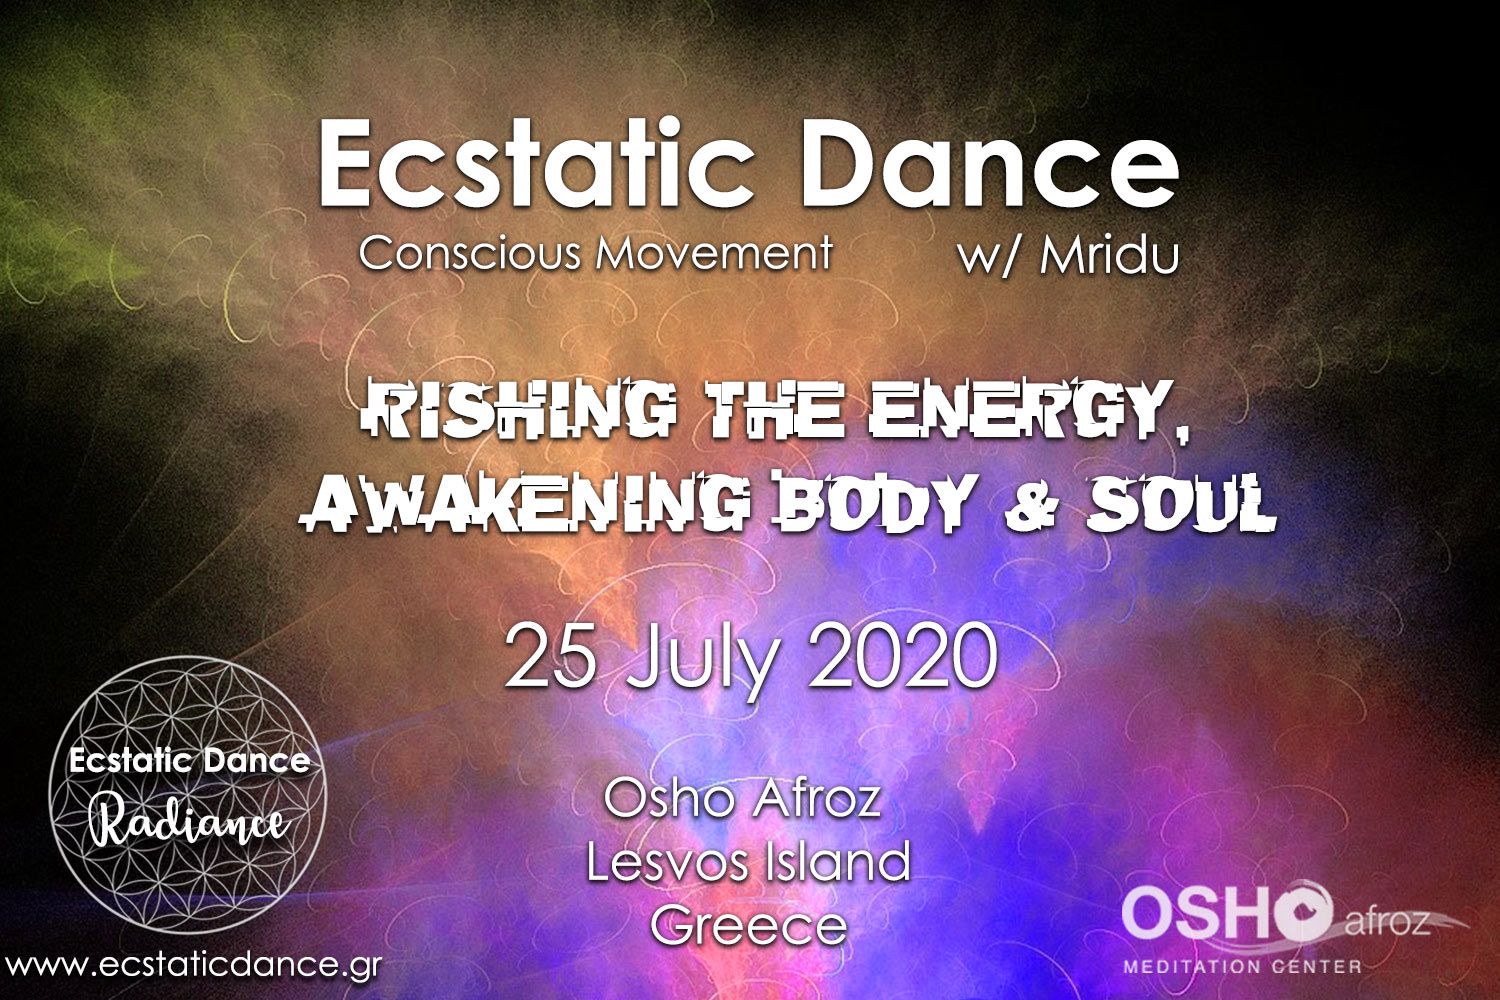 Ecstatic_dance_Afroz_awakening